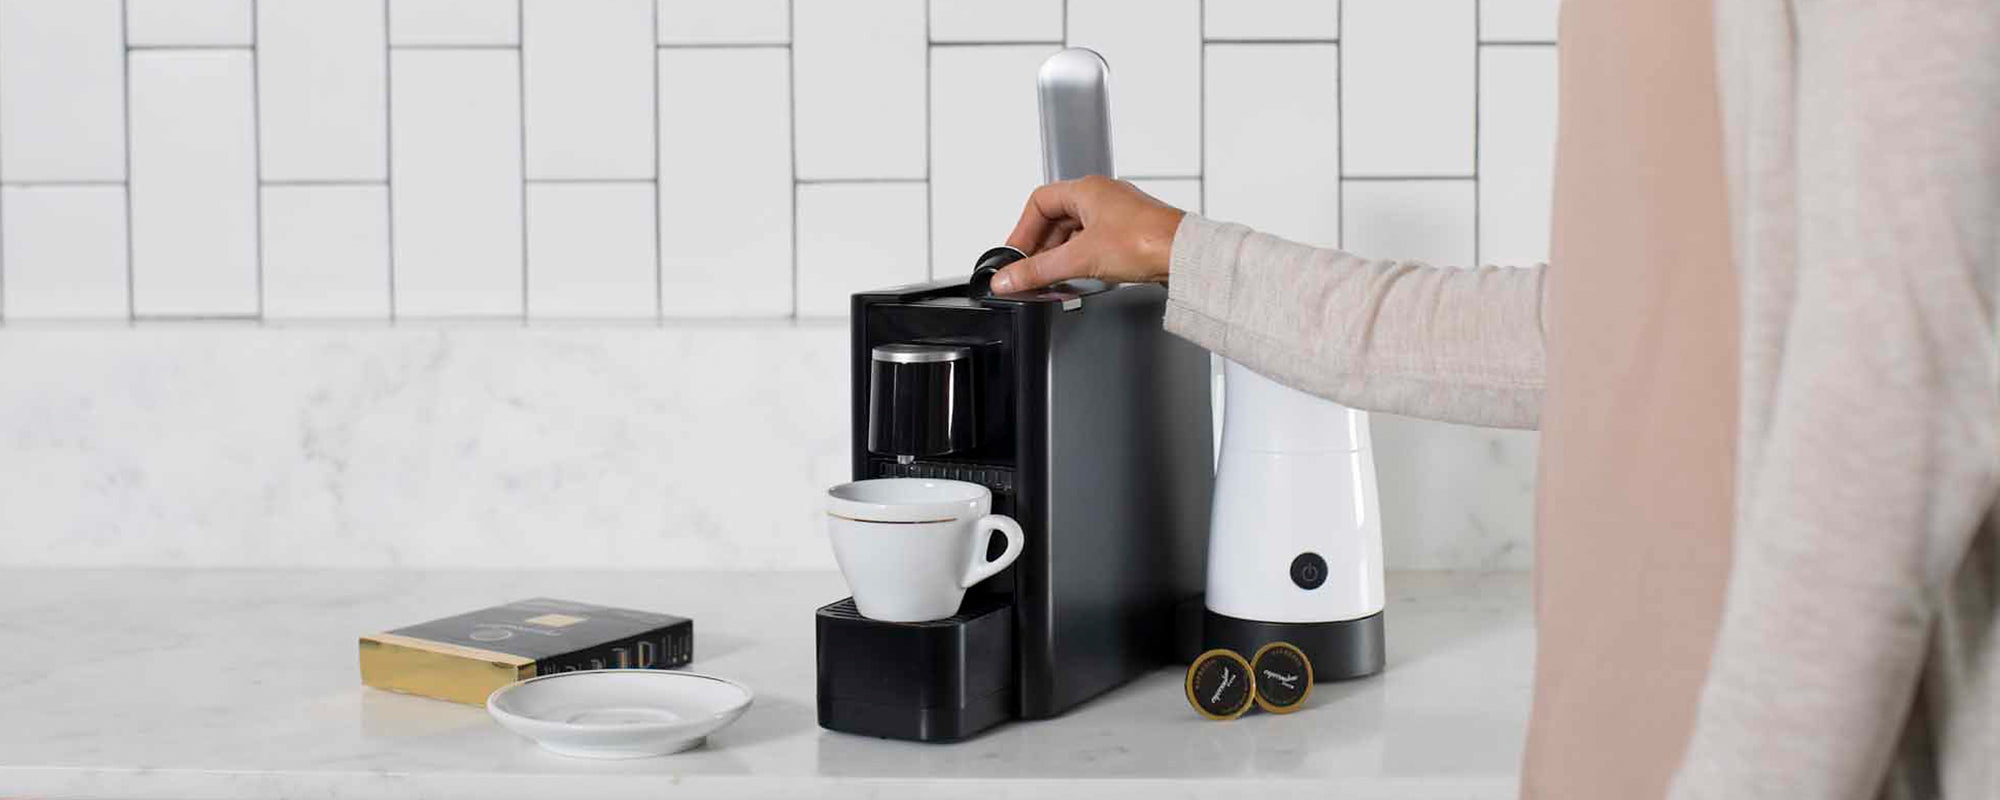 Making Coffee With a Piccolo Capsule Machine